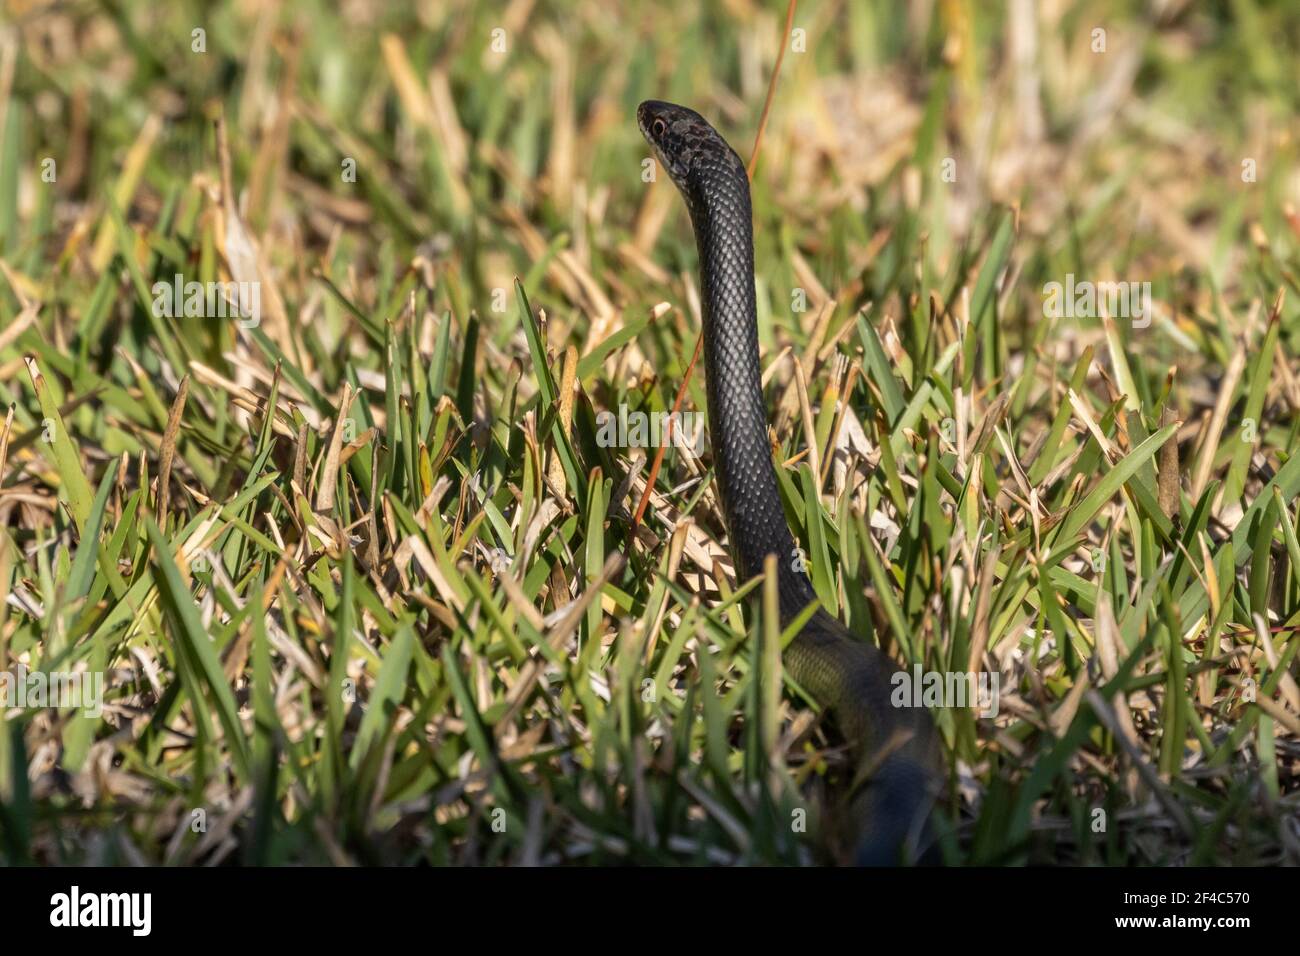 Black racer snake in a suburban yard Stock Photo